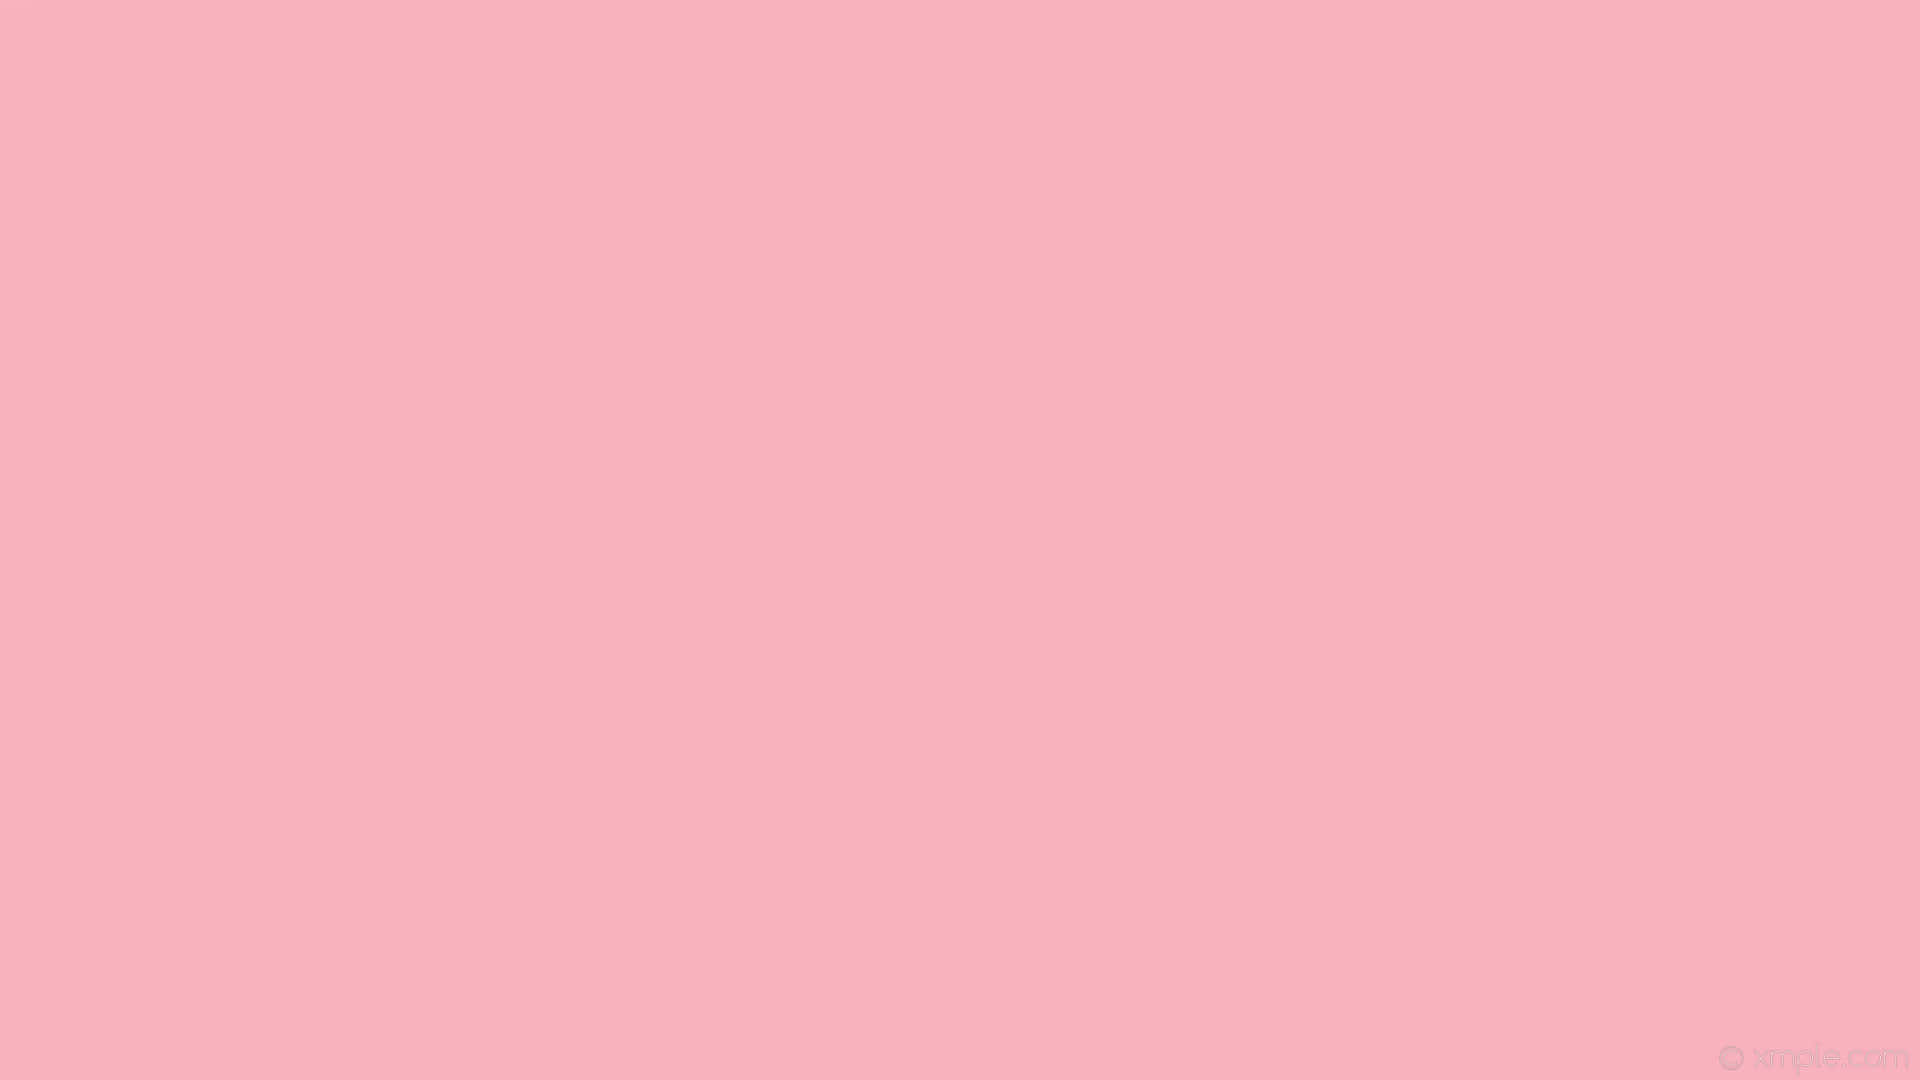 Plain pink desktop with a white chair Wallpaper